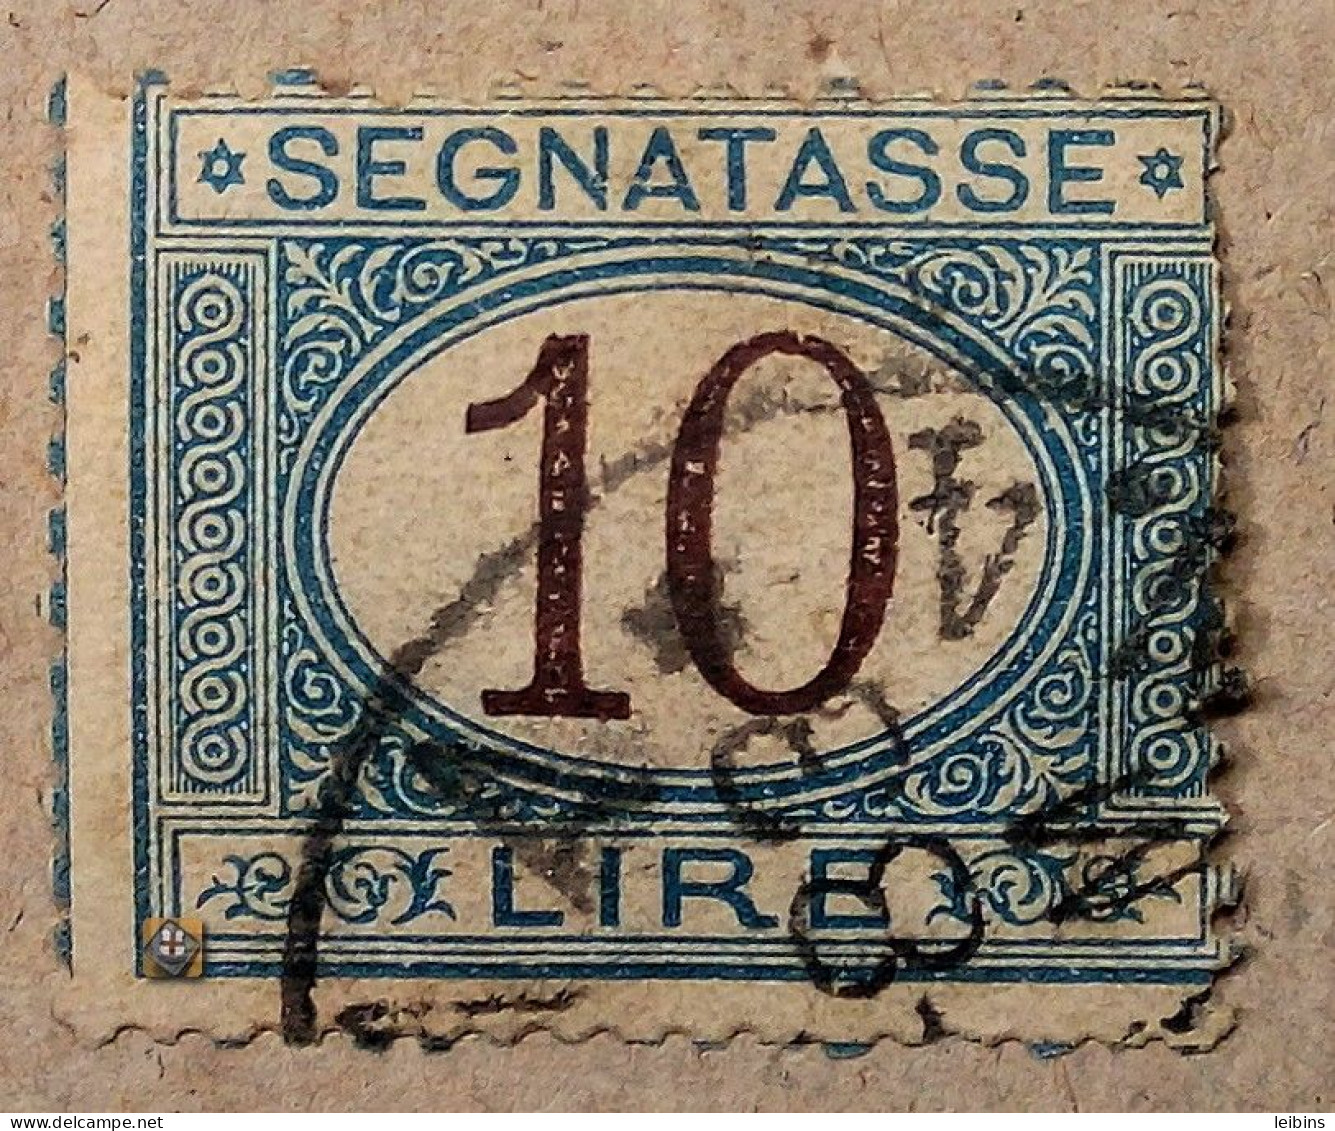 1870 Italien Mi.P 14, 10L /o - Taxe